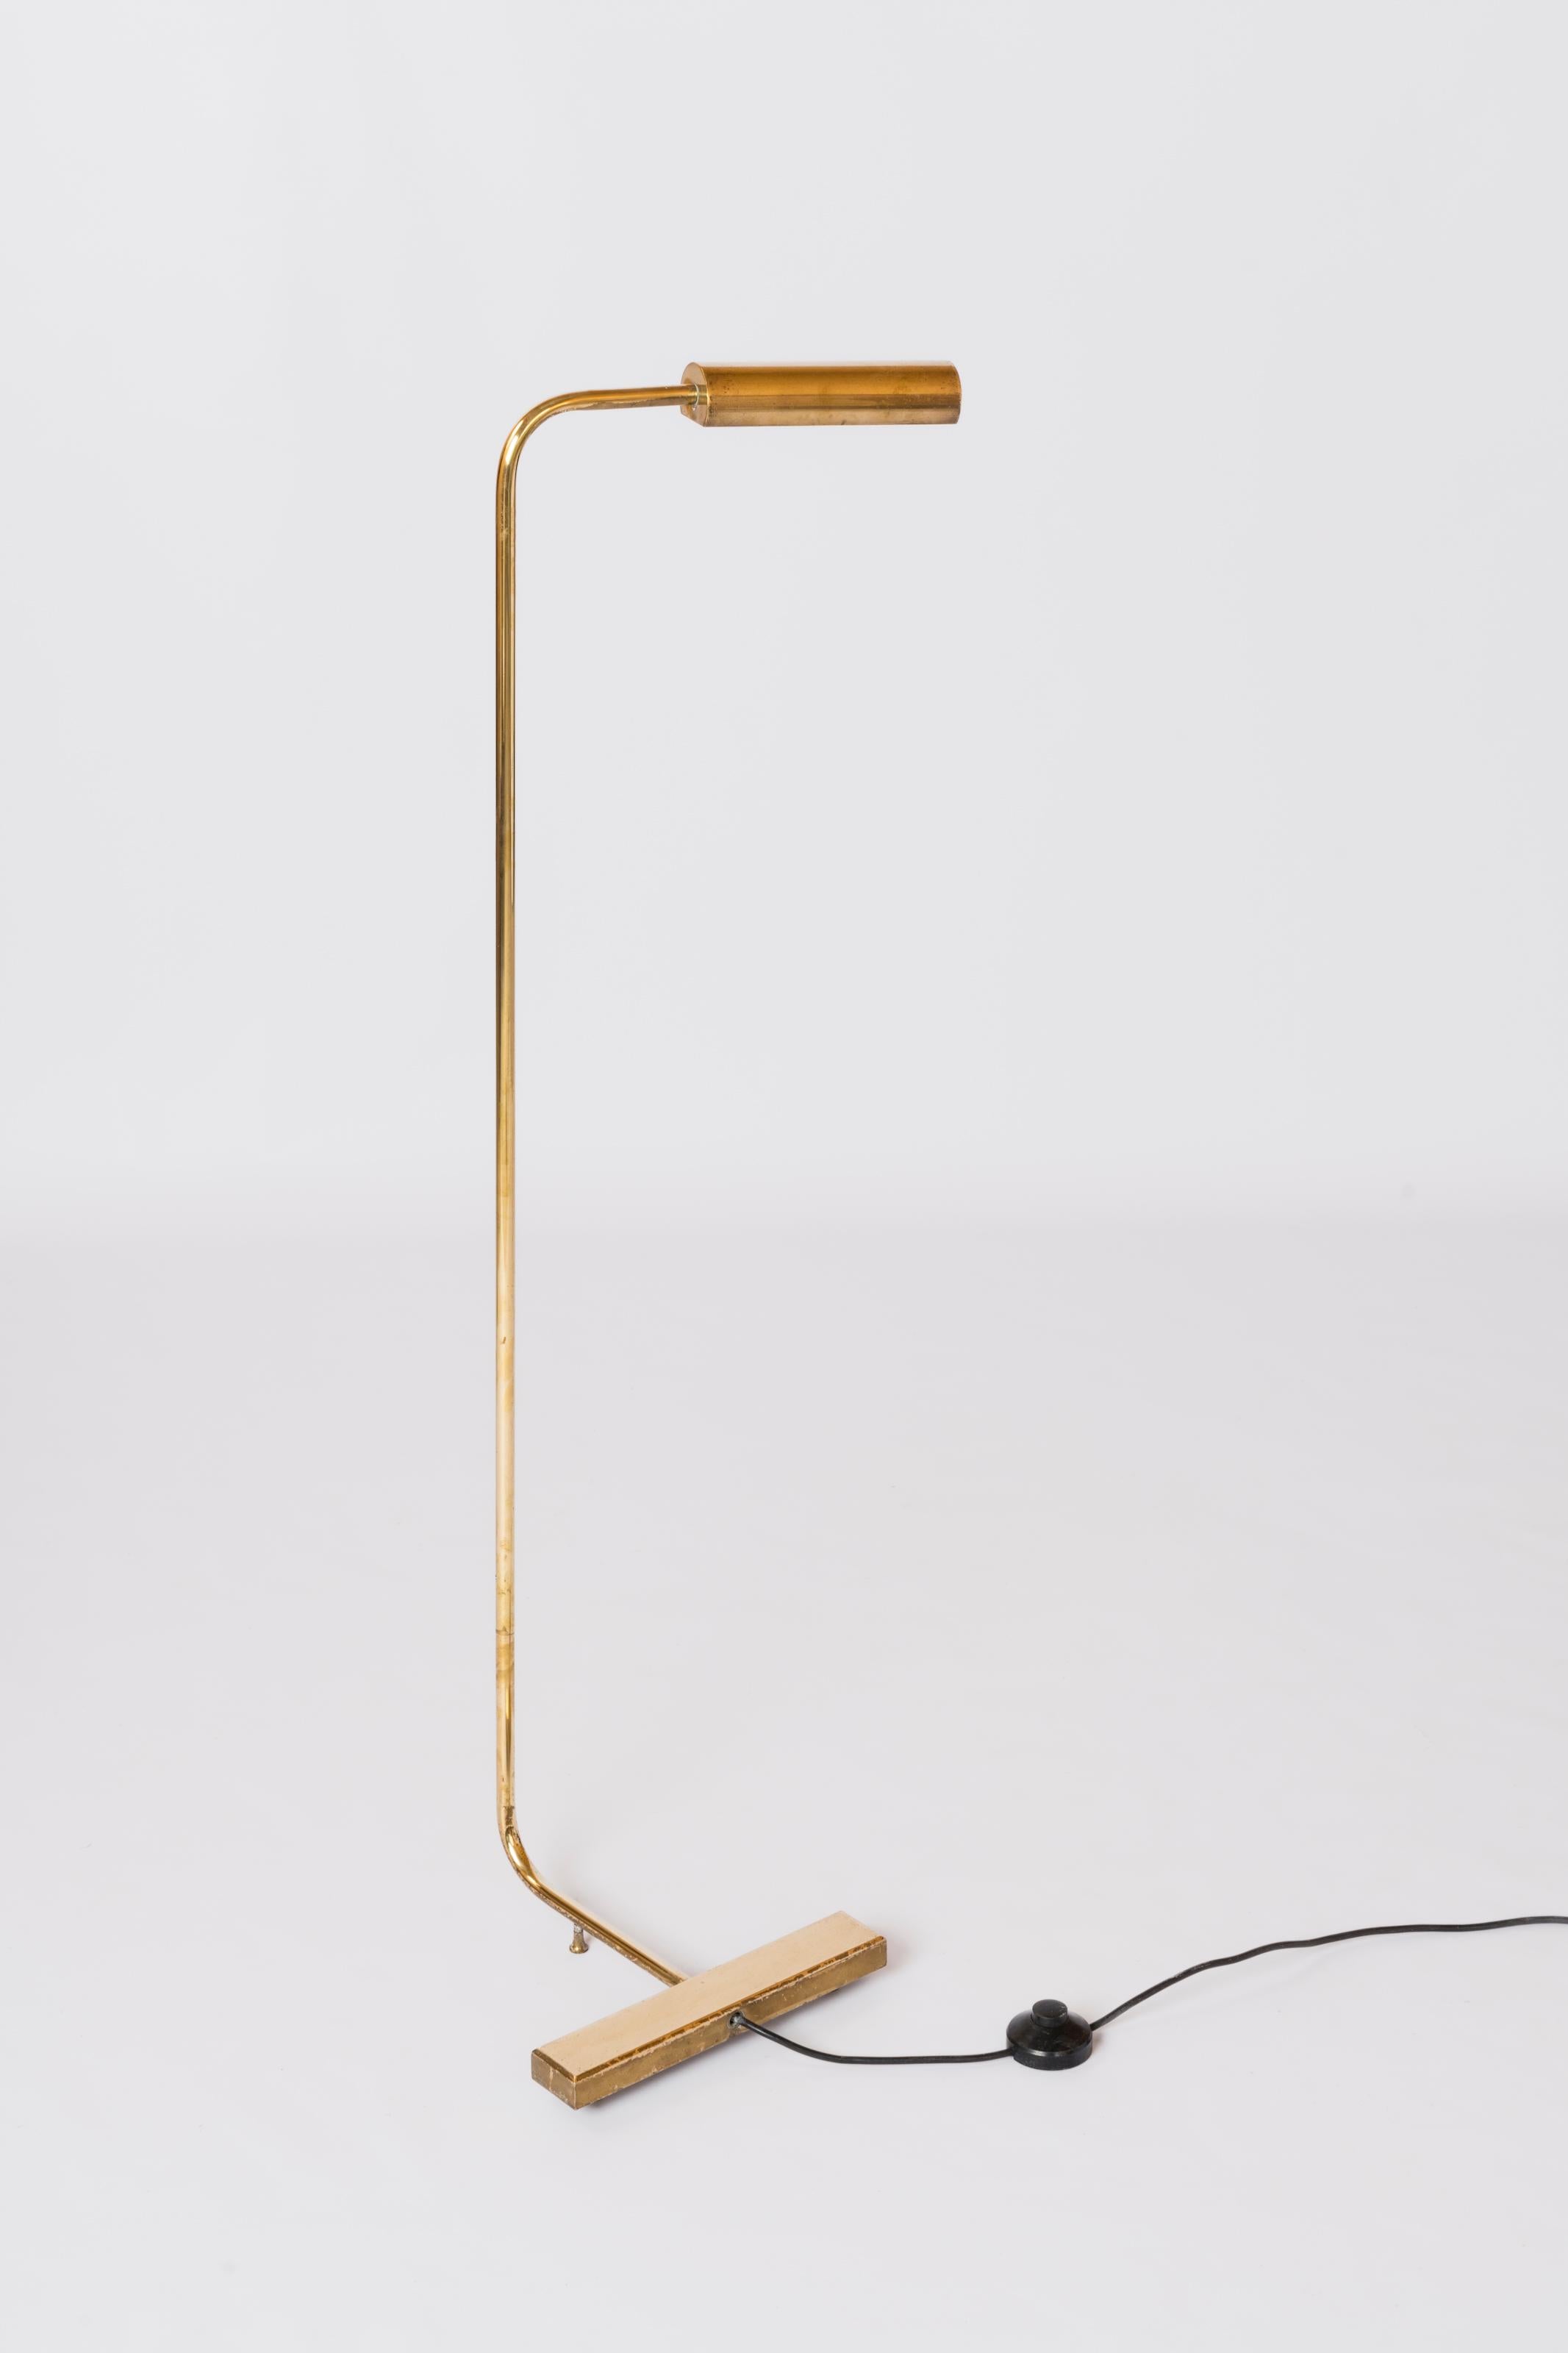 Gilt Bronze Reading Lamp att. Cedric Hartman - USA 1970's For Sale 1